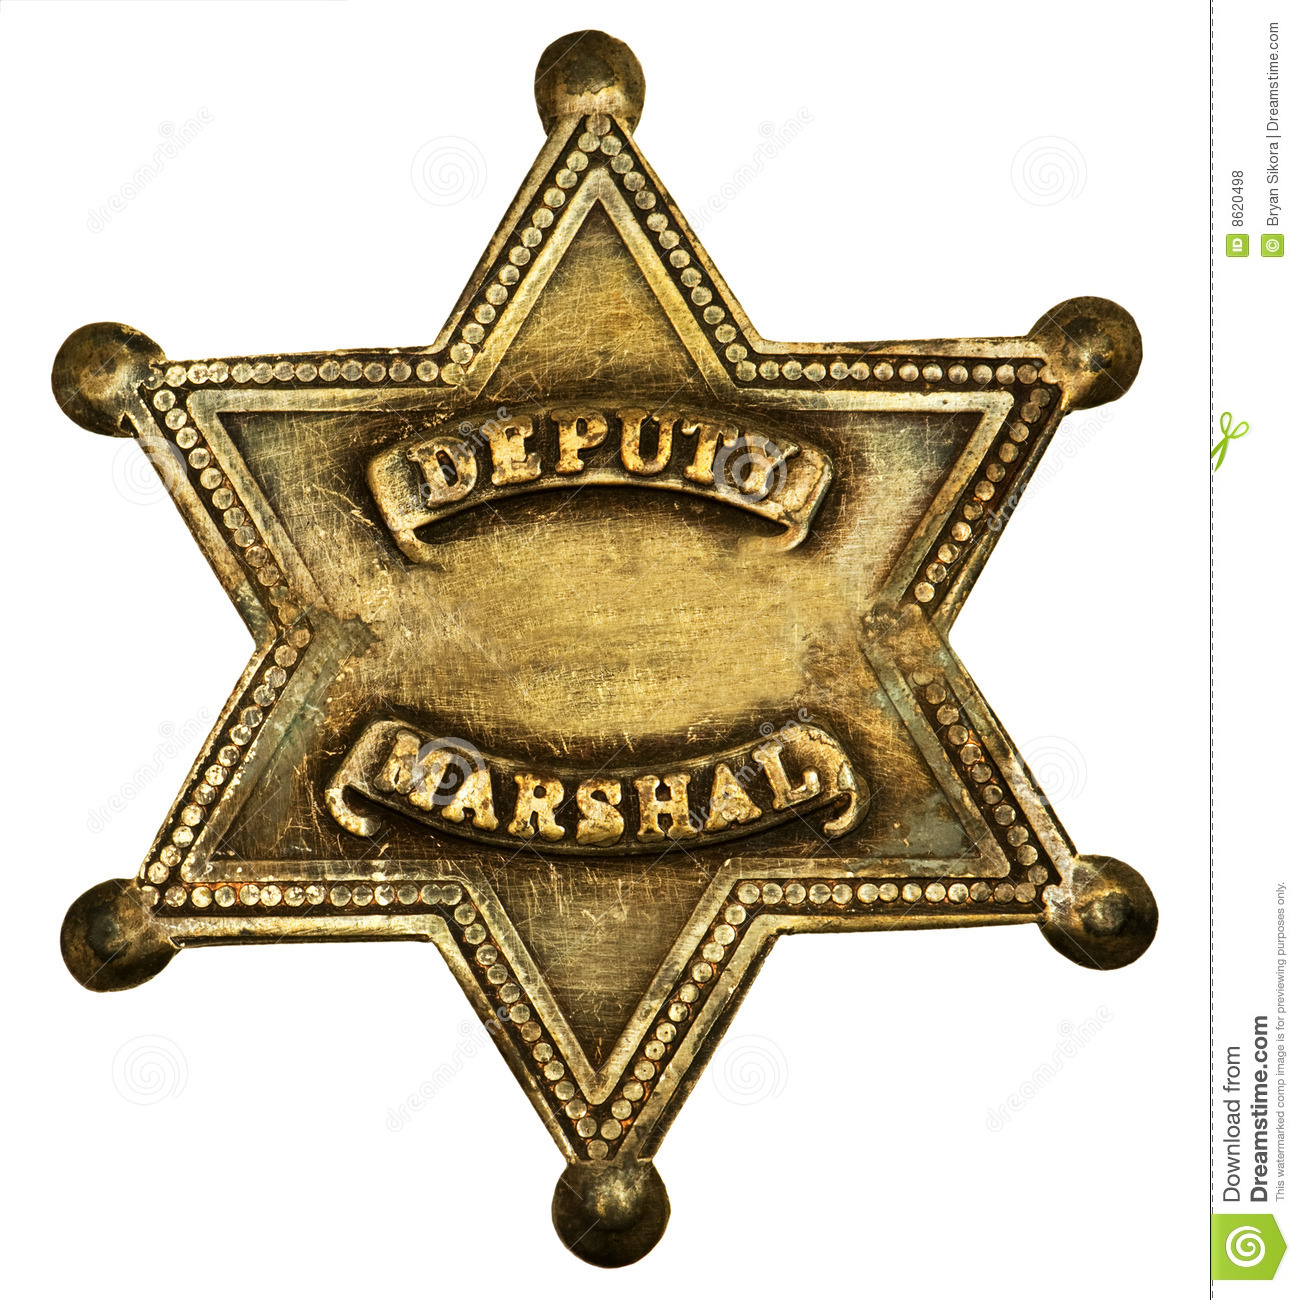 Authentic Deputy Marshall Badge Royalty Free Stock Photos   Image